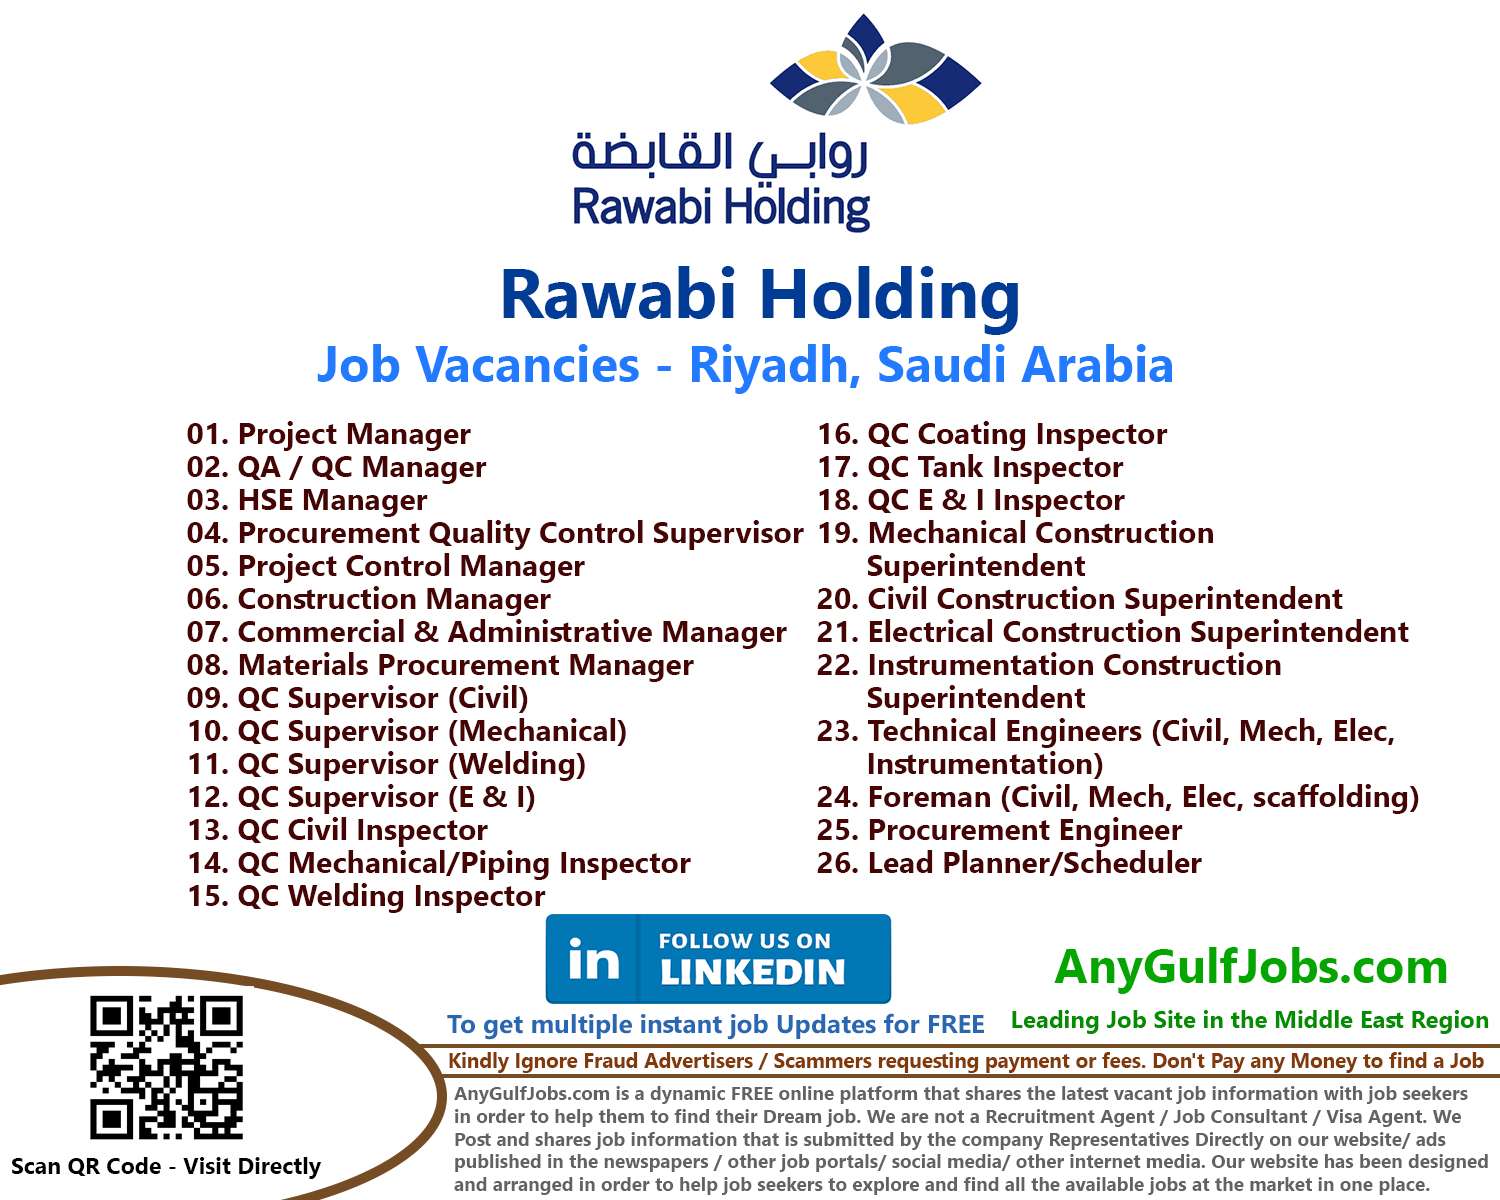 Rawabi Holding Job Vacancies - Riyadh, Saudi Arabia, And Also We are going to describe to you the ways to get a job in Rawabi Holding - Riyadh, Saudi Arabia.